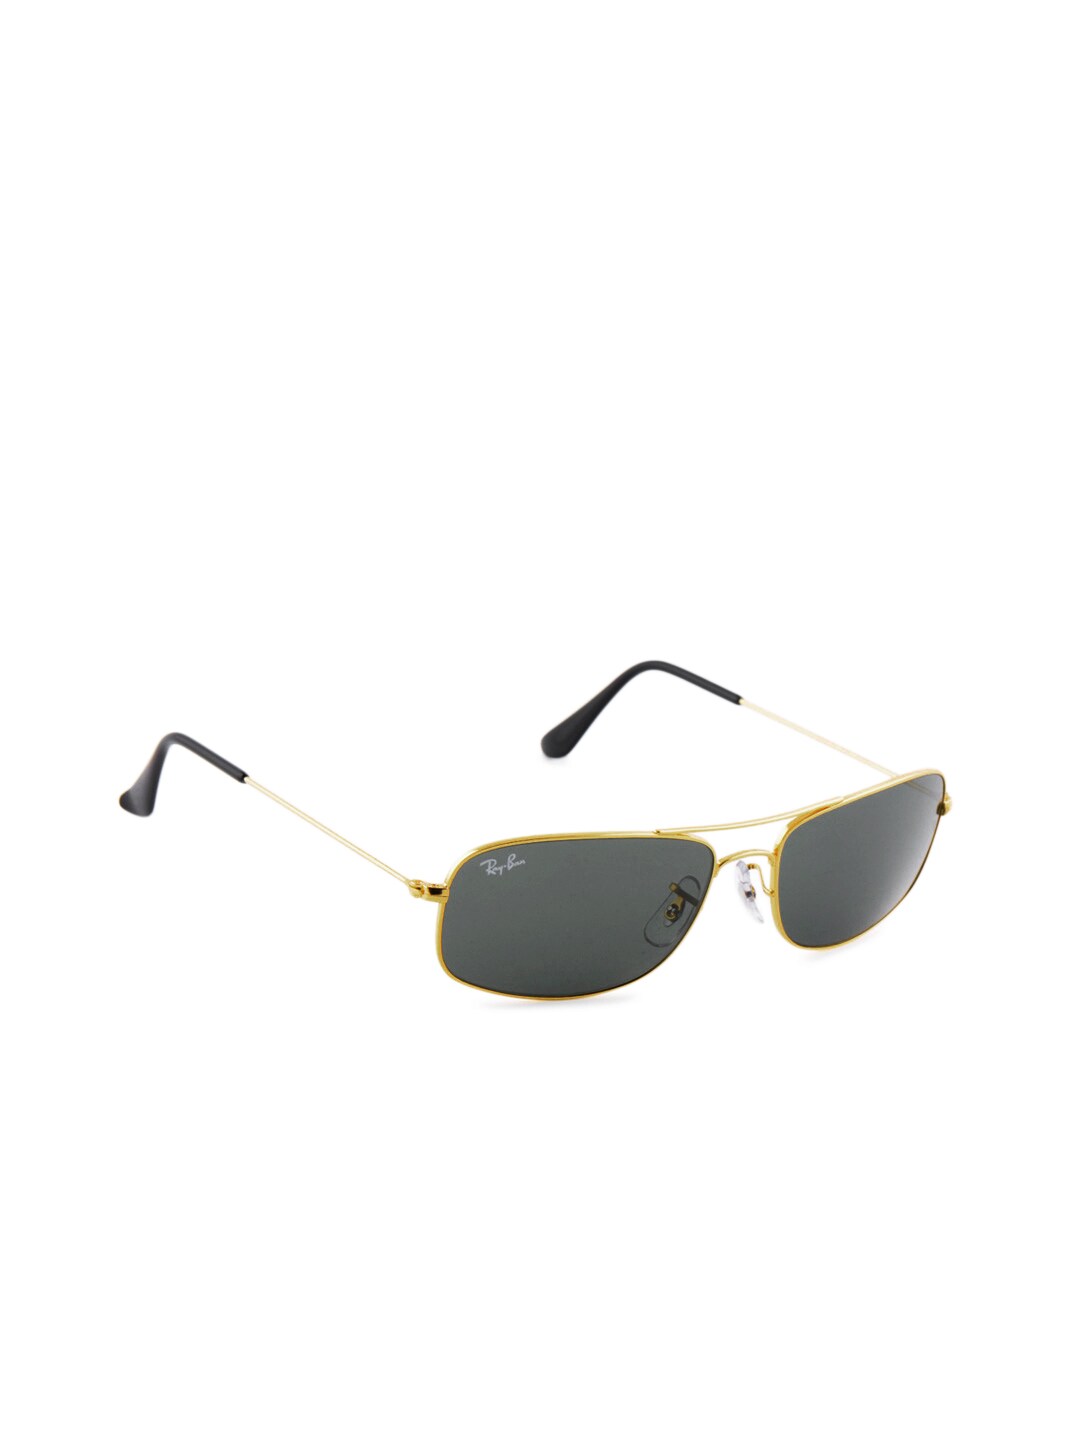 Ray-Ban Men Active Lifestyle Gold Sunglasses